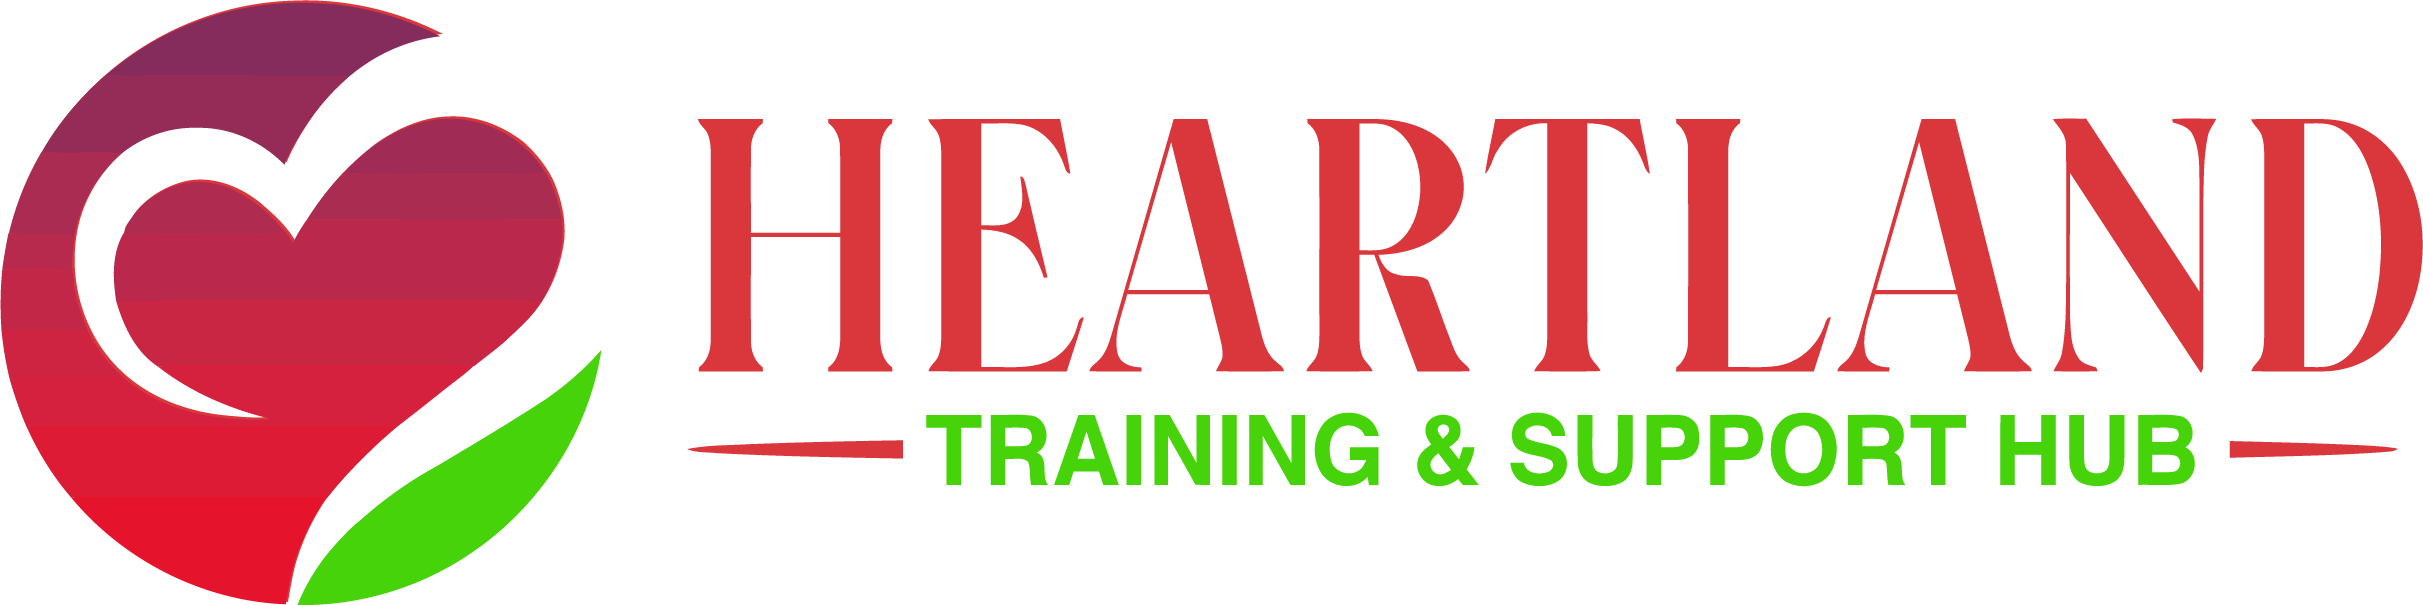 Heartland Training & Support Hub Logo